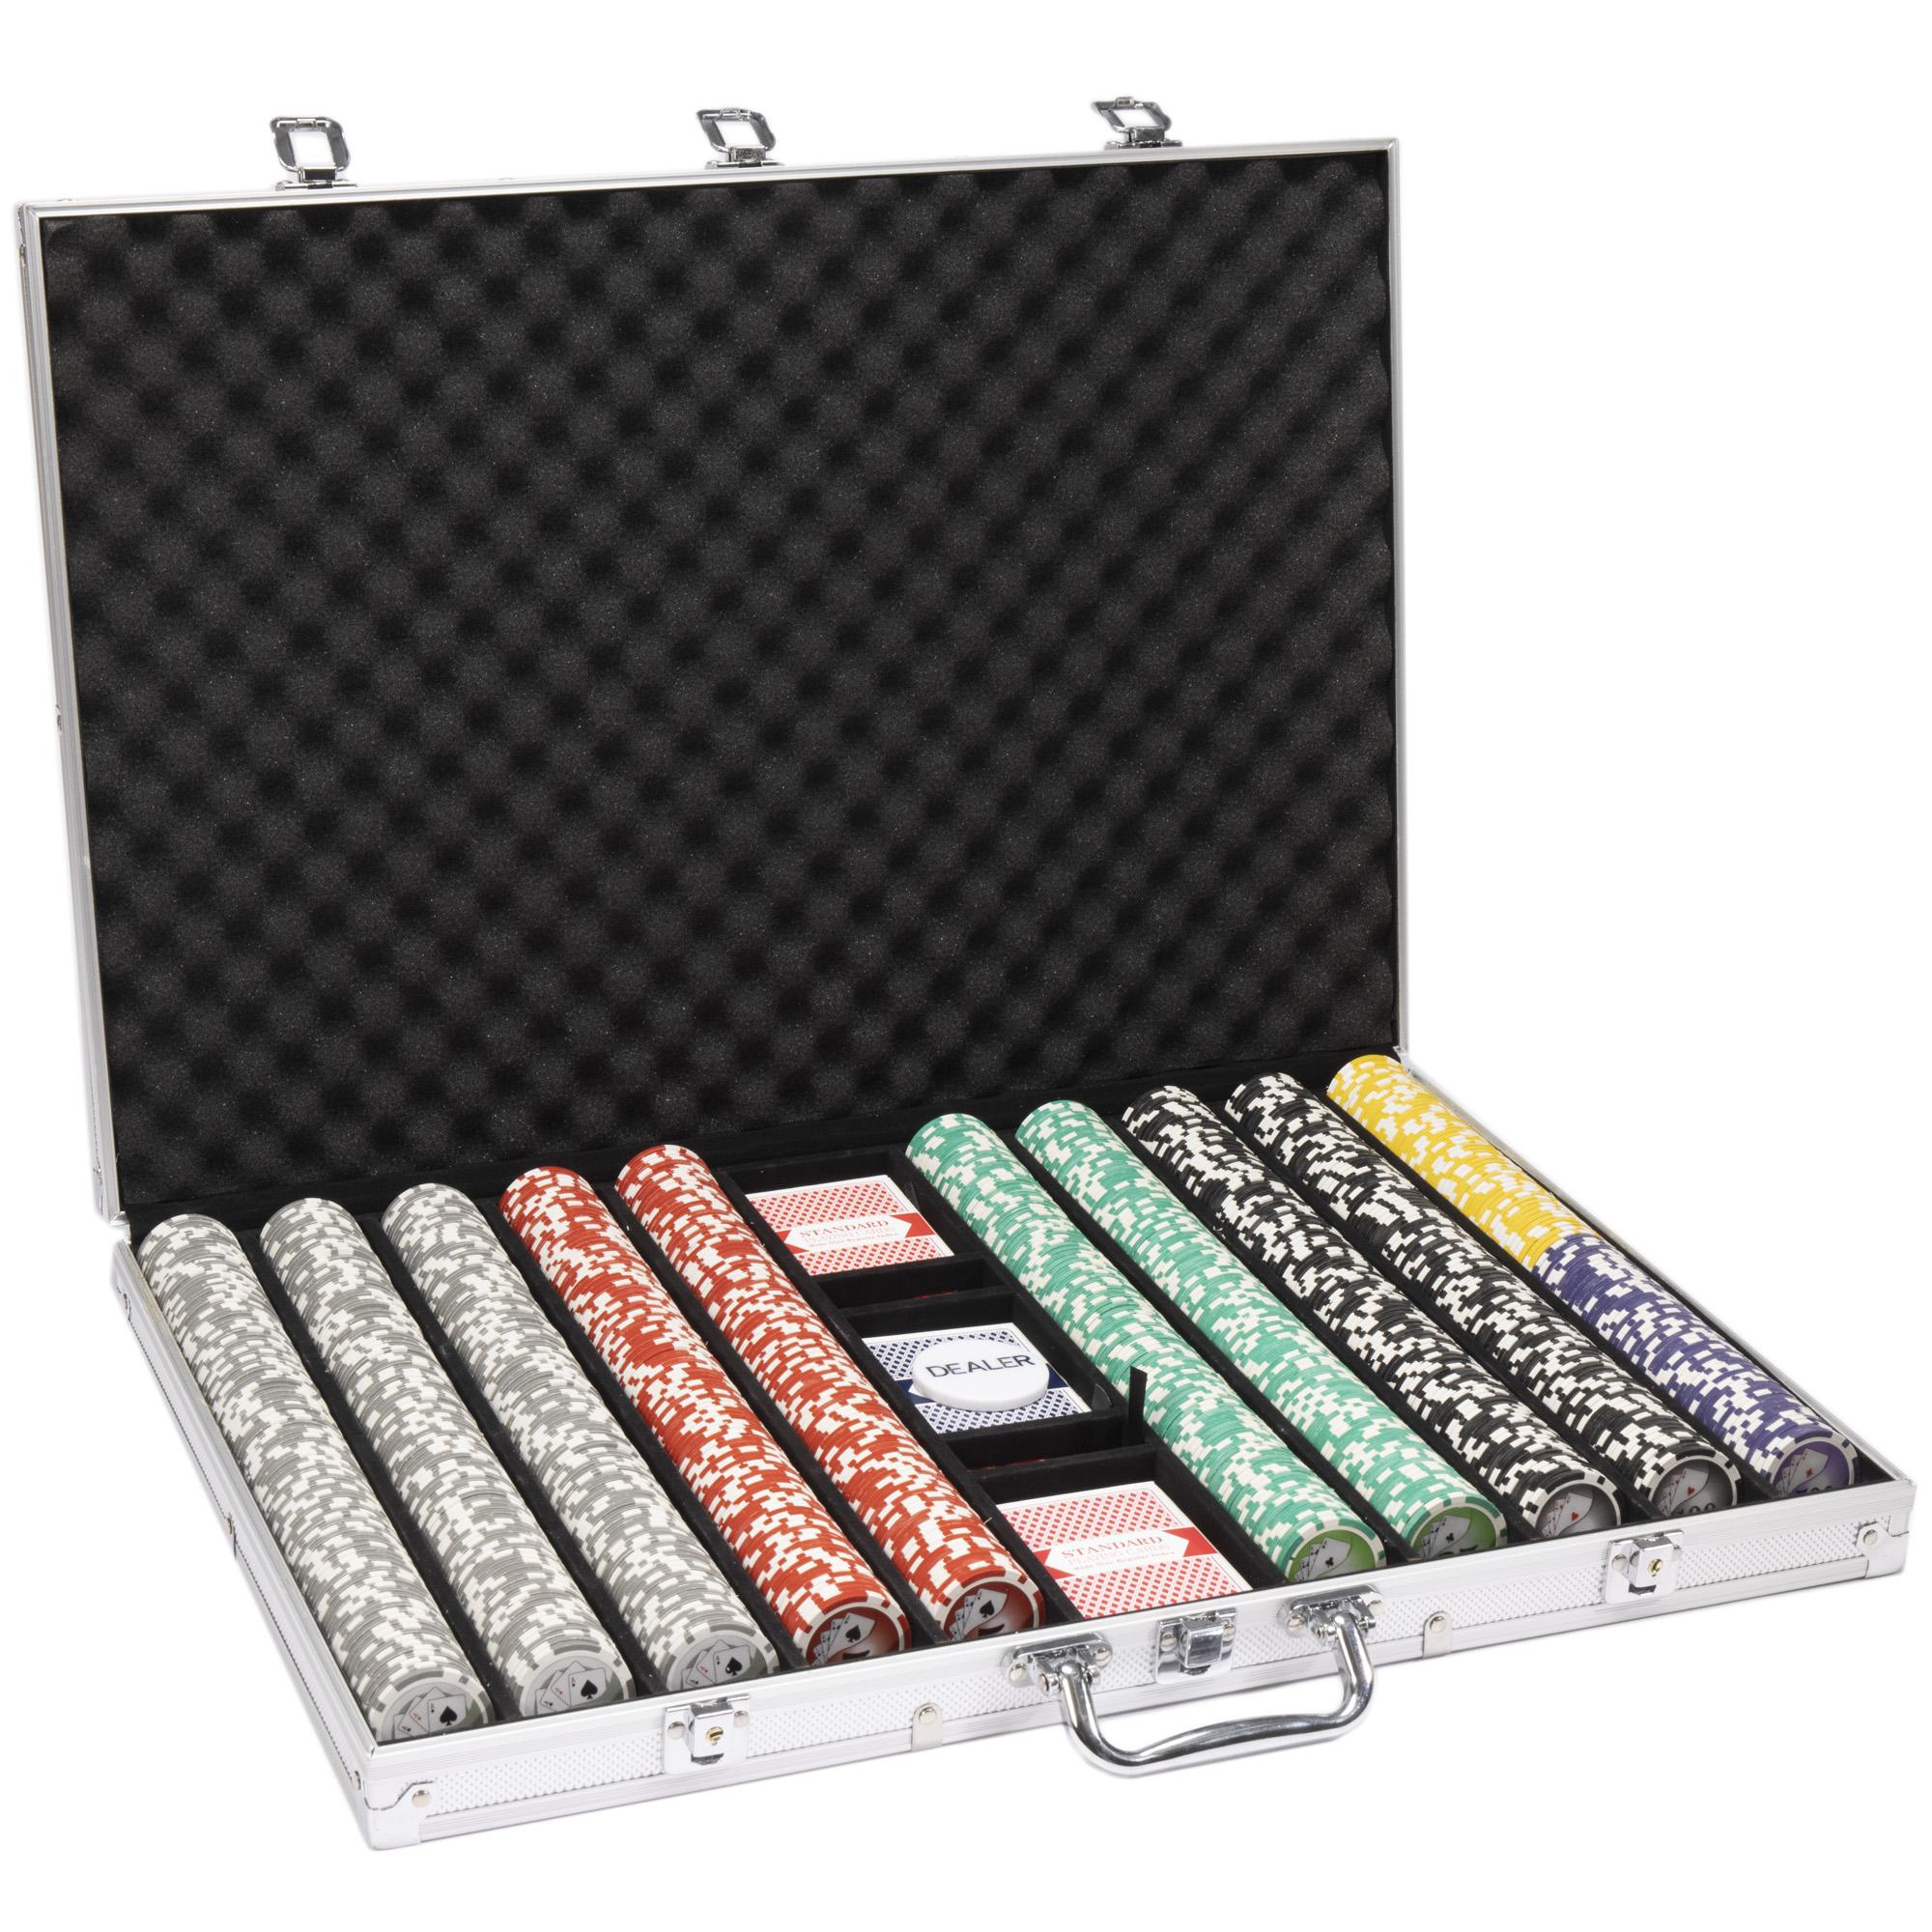 Yin Yang 14-gram Poker Chip Set in Aluminum Case (1000 Count)